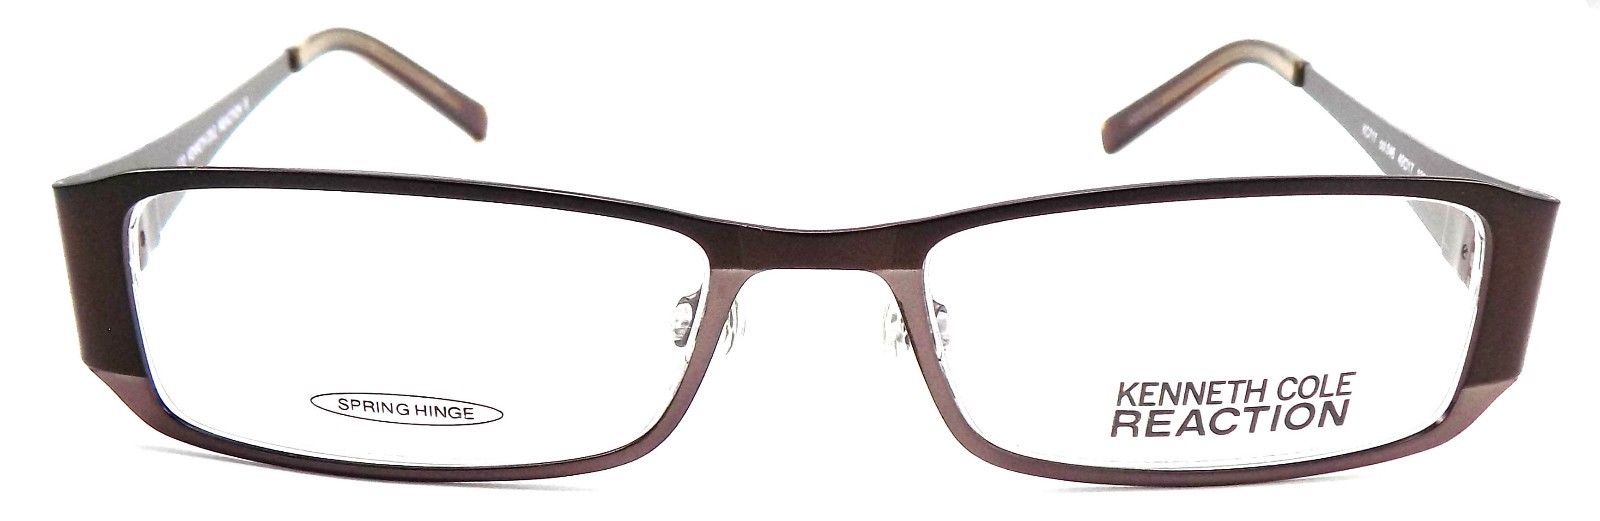 2-Kenneth Cole REACTION KC0717 046 Women's Eyeglasses 49-17-130 Light Brown + Case-726773164571-IKSpecs